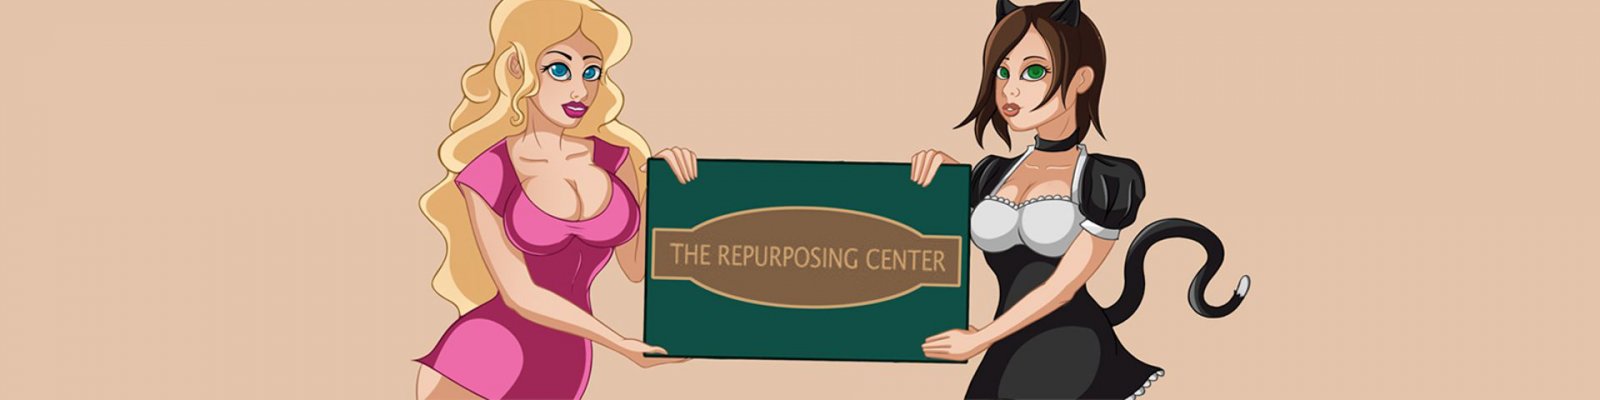 Jpmaggers - The Repurposing Center v0.3.2a Porn Game